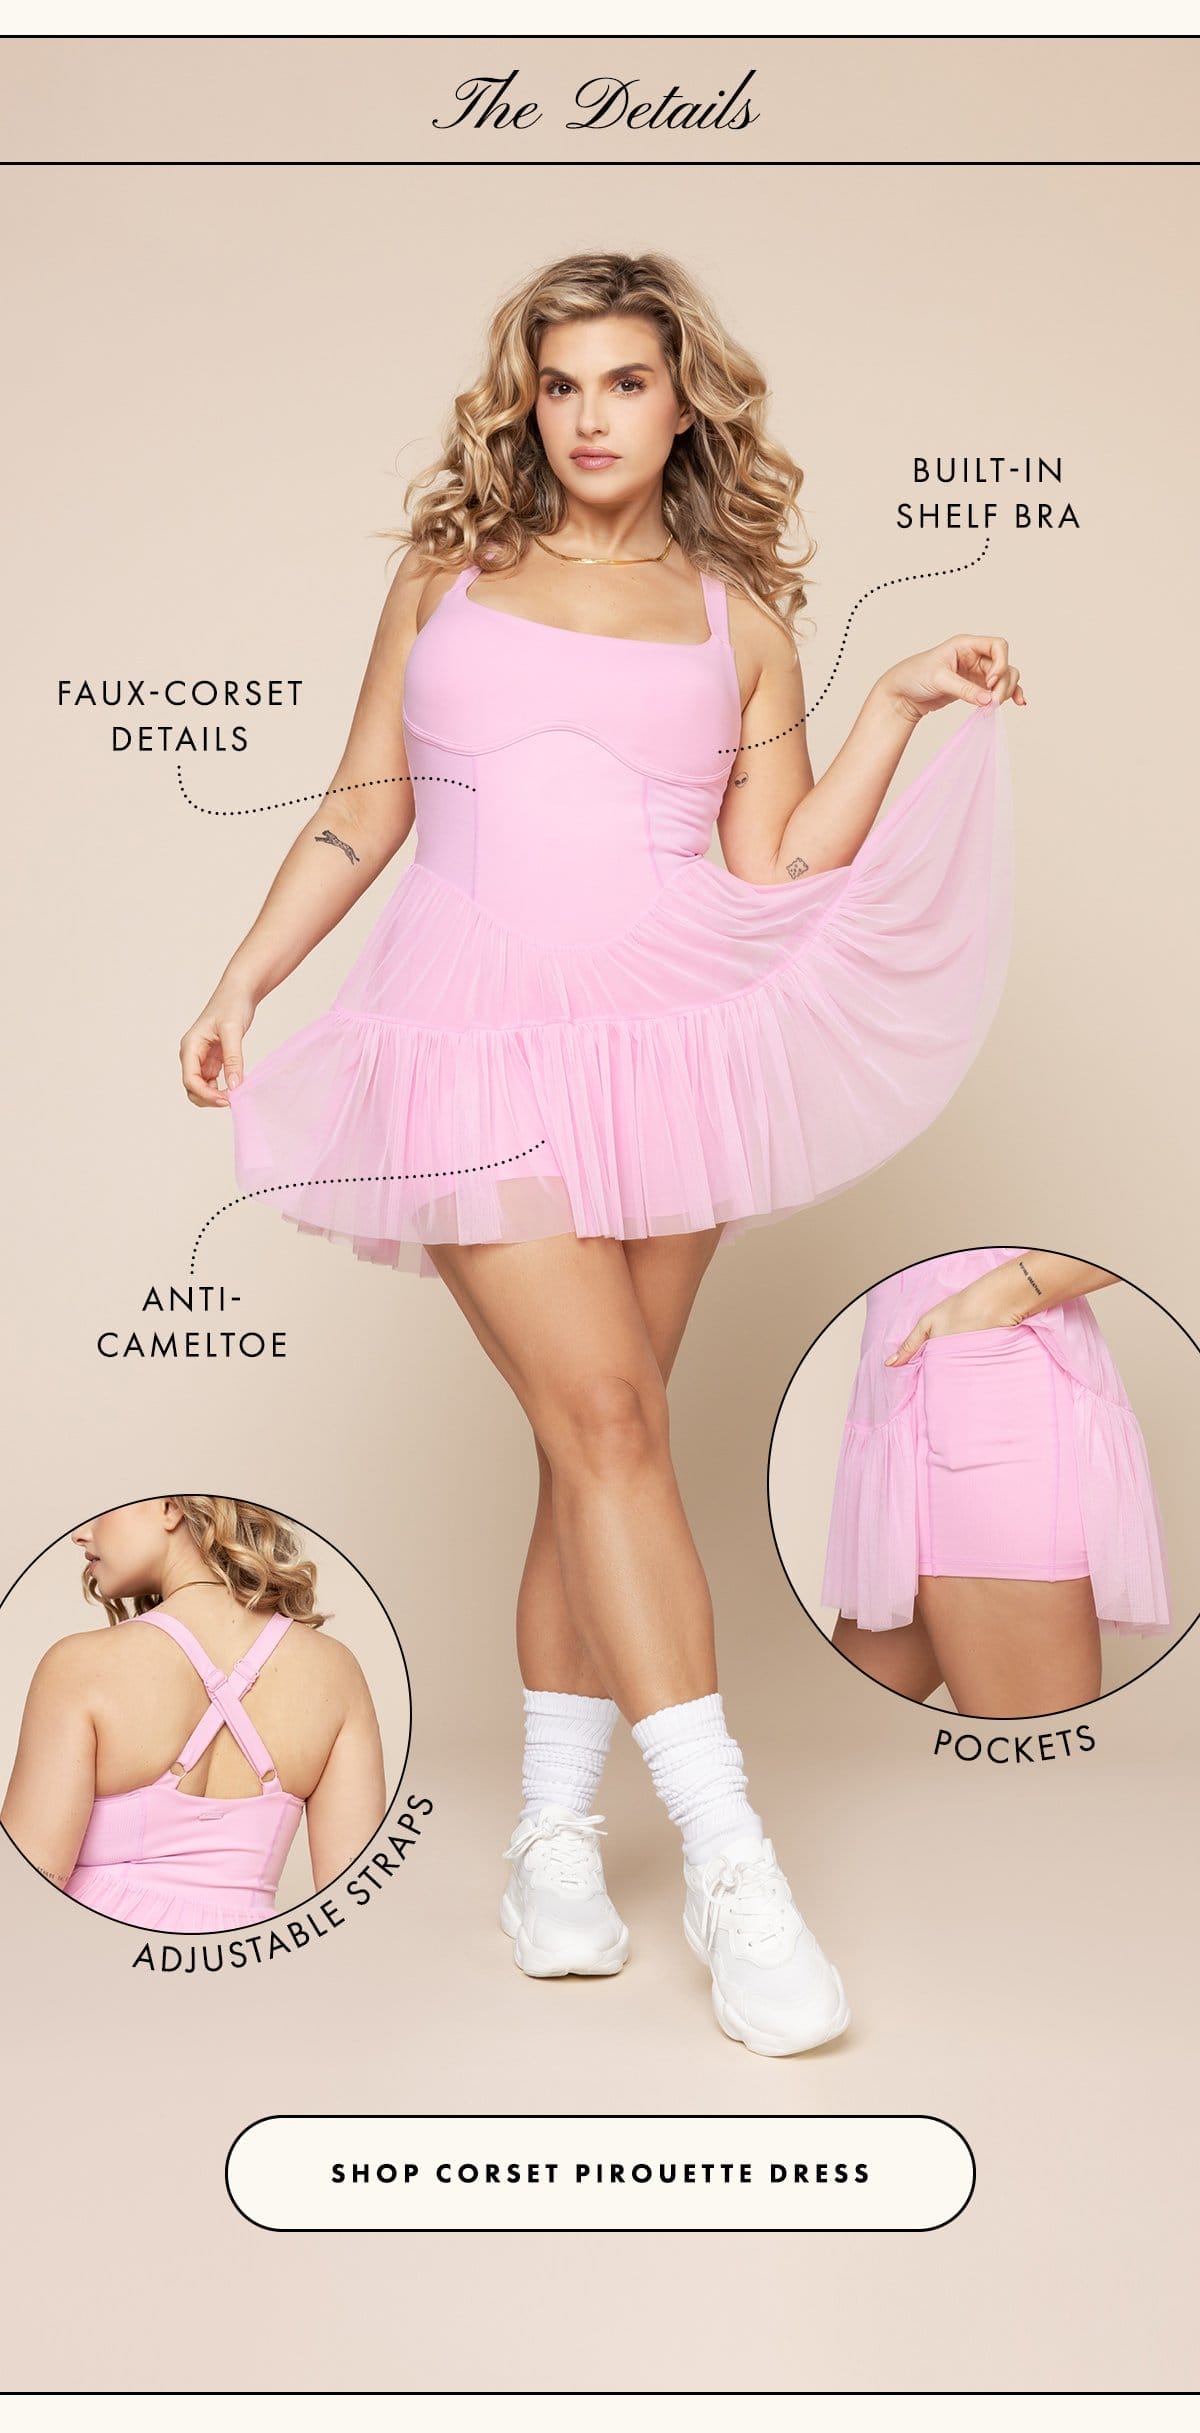 Shop Corset Pirouette Dress